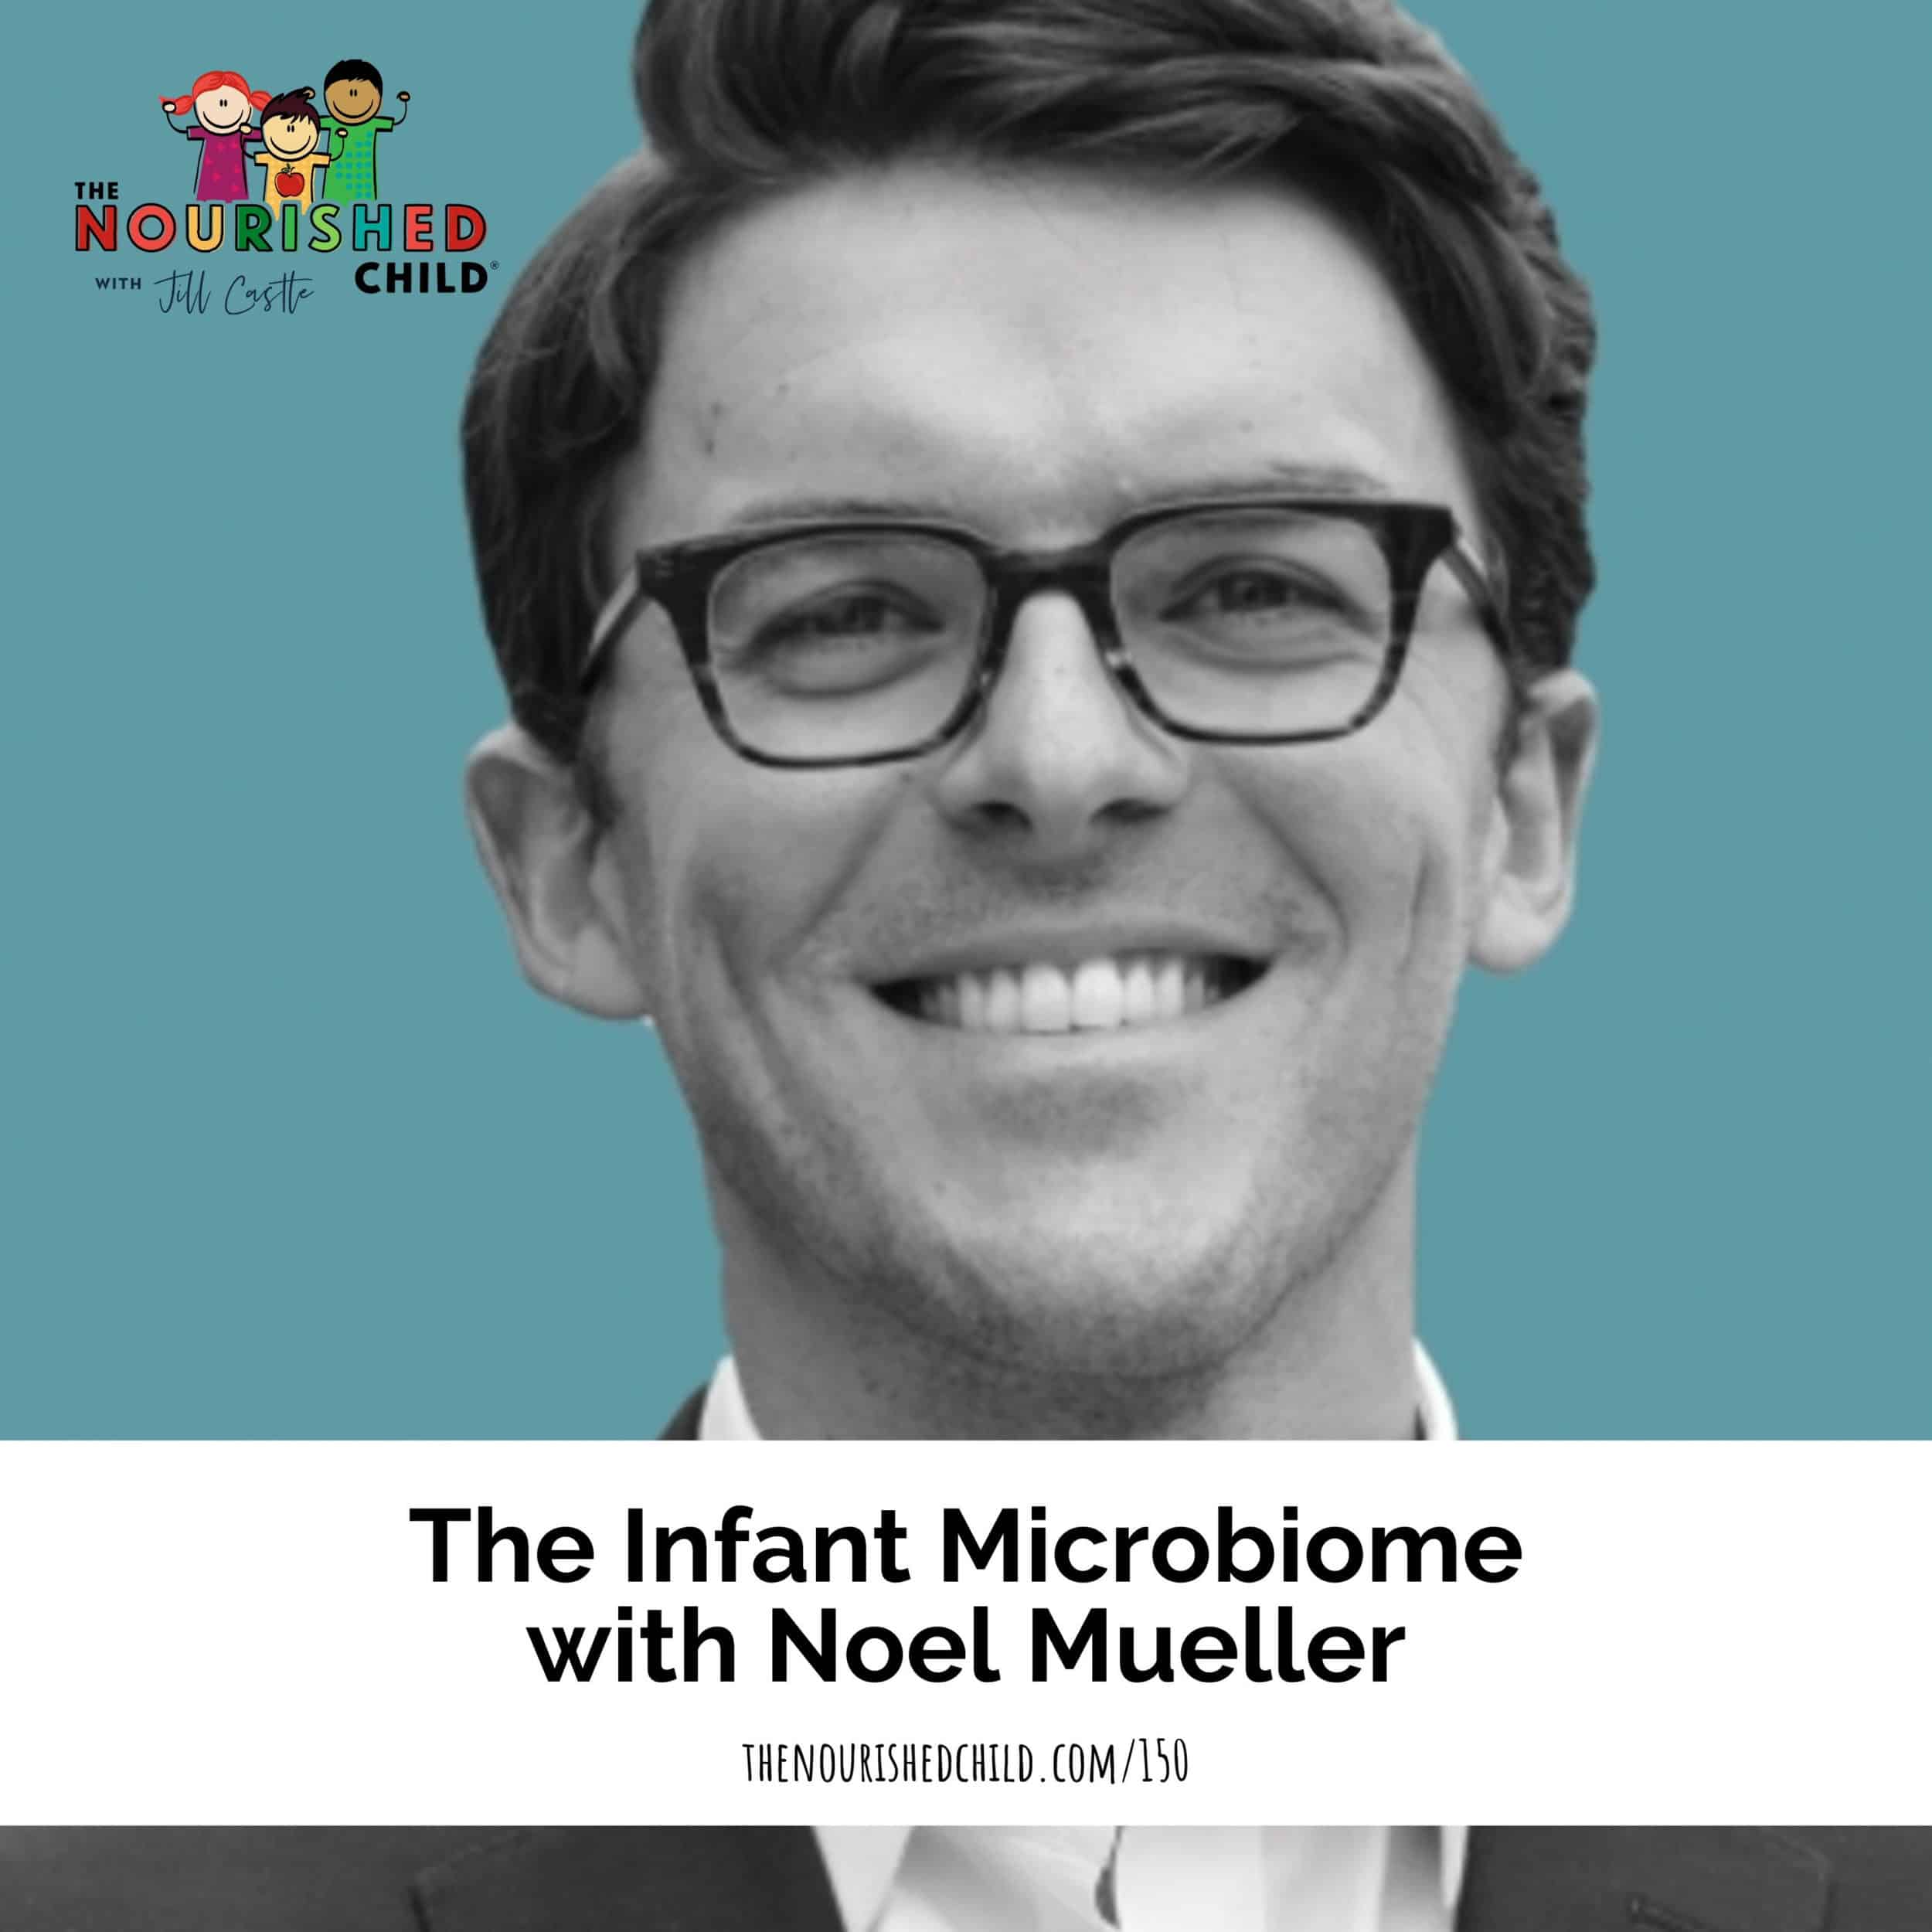 Noel Mueller on The Nourished Child podcast